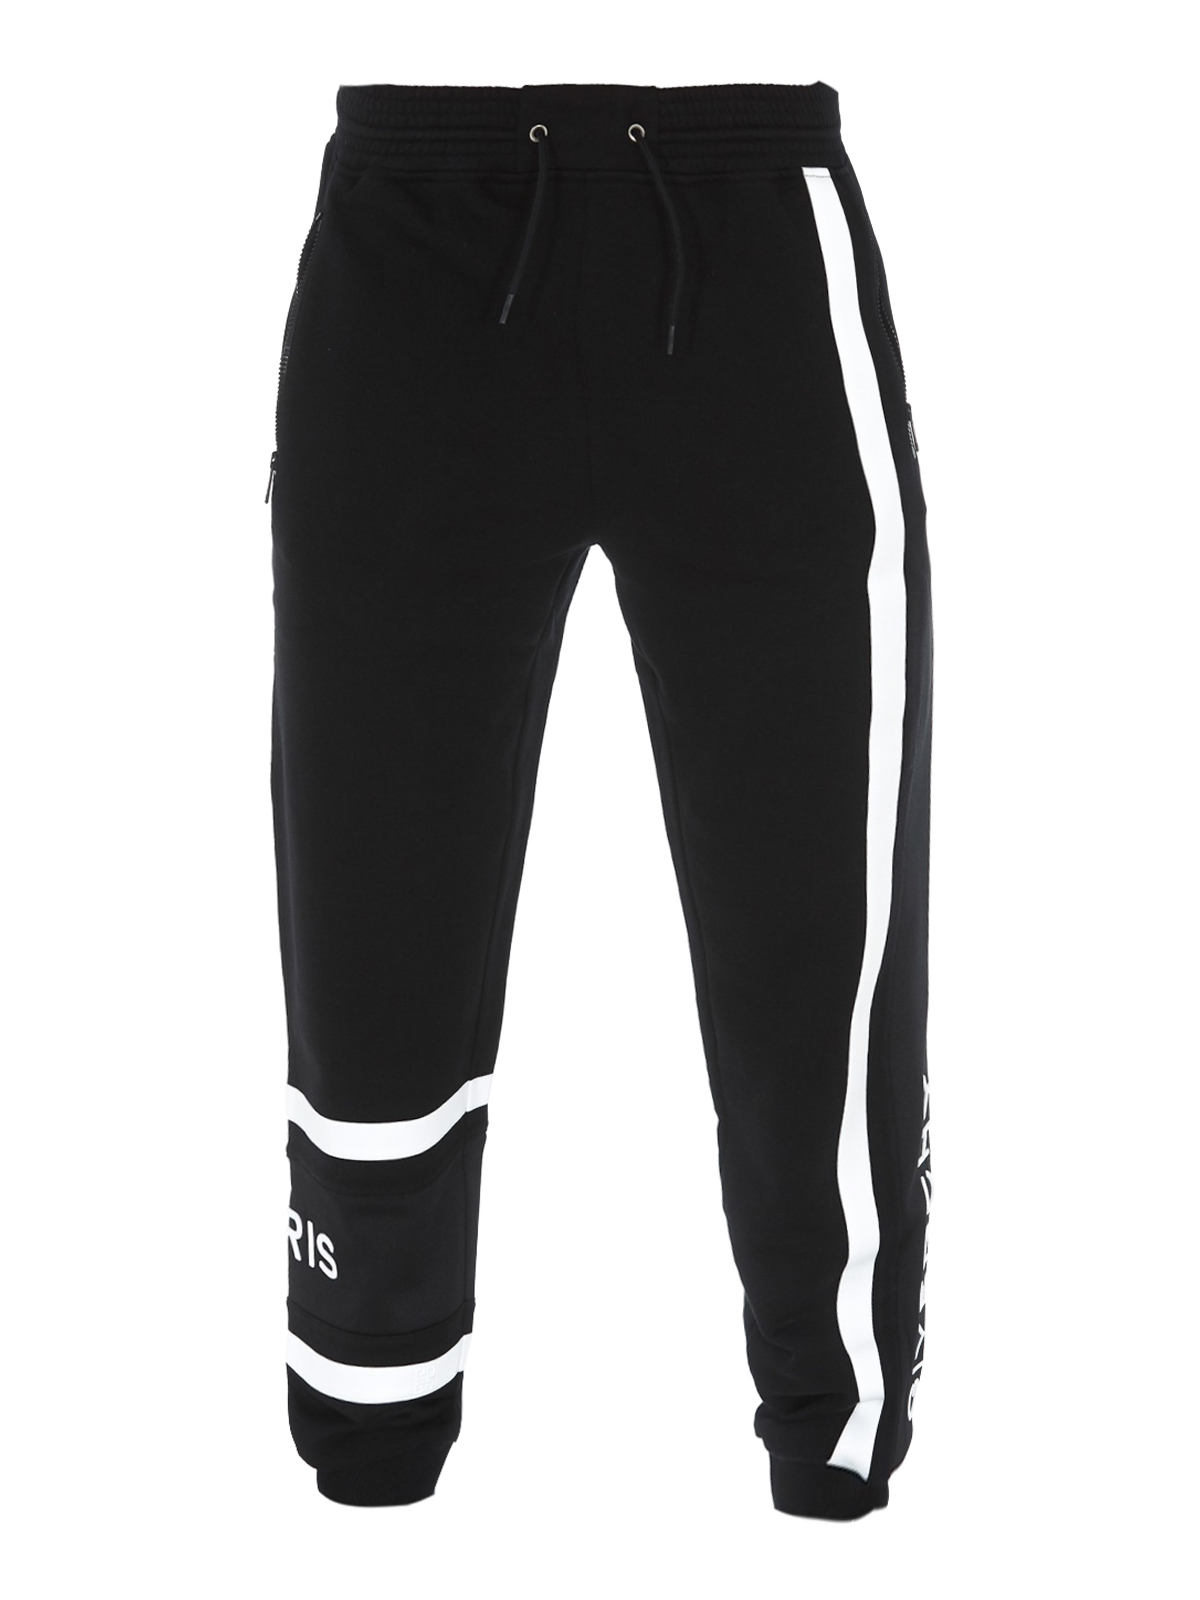 Givenchy Sweatpants & Joggers for Men - Poshmark